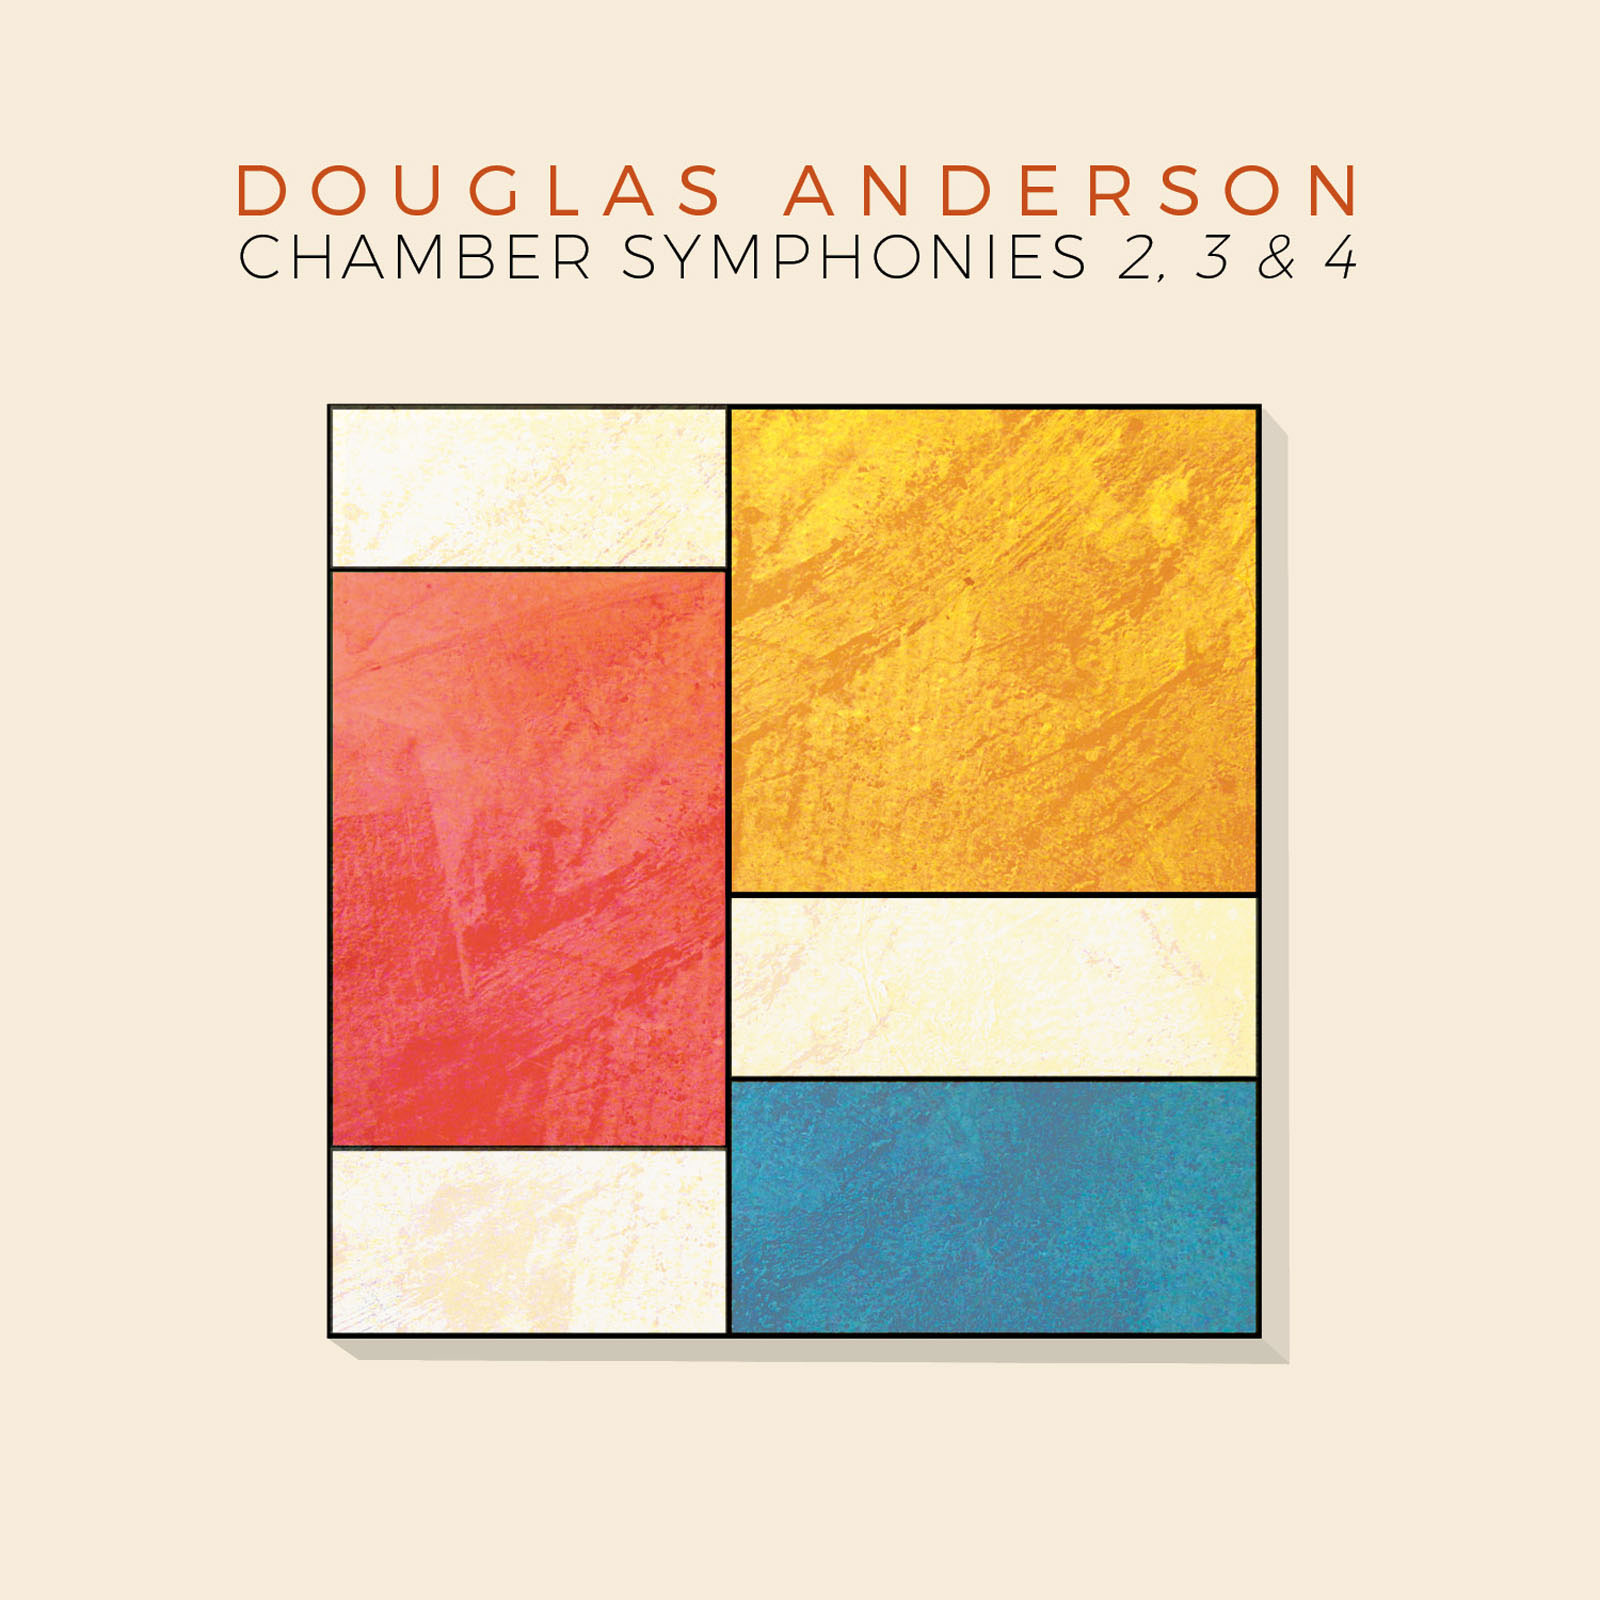 Chamber Symphonies 2, 3 & 4